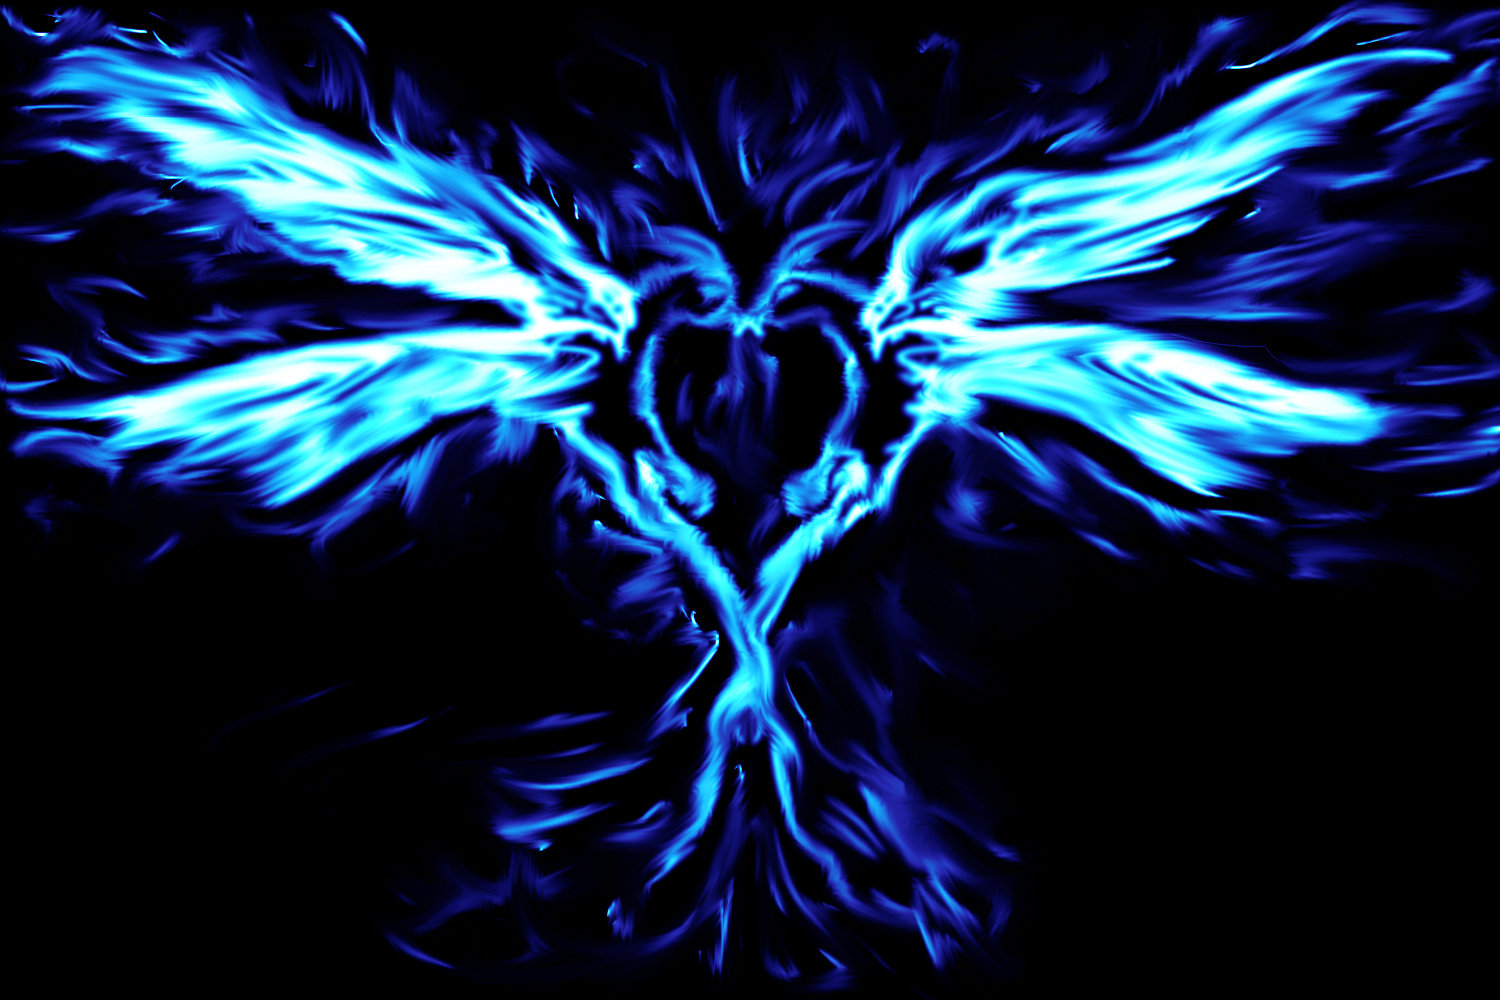 Blue Phoenix Love by punkisstillcool on